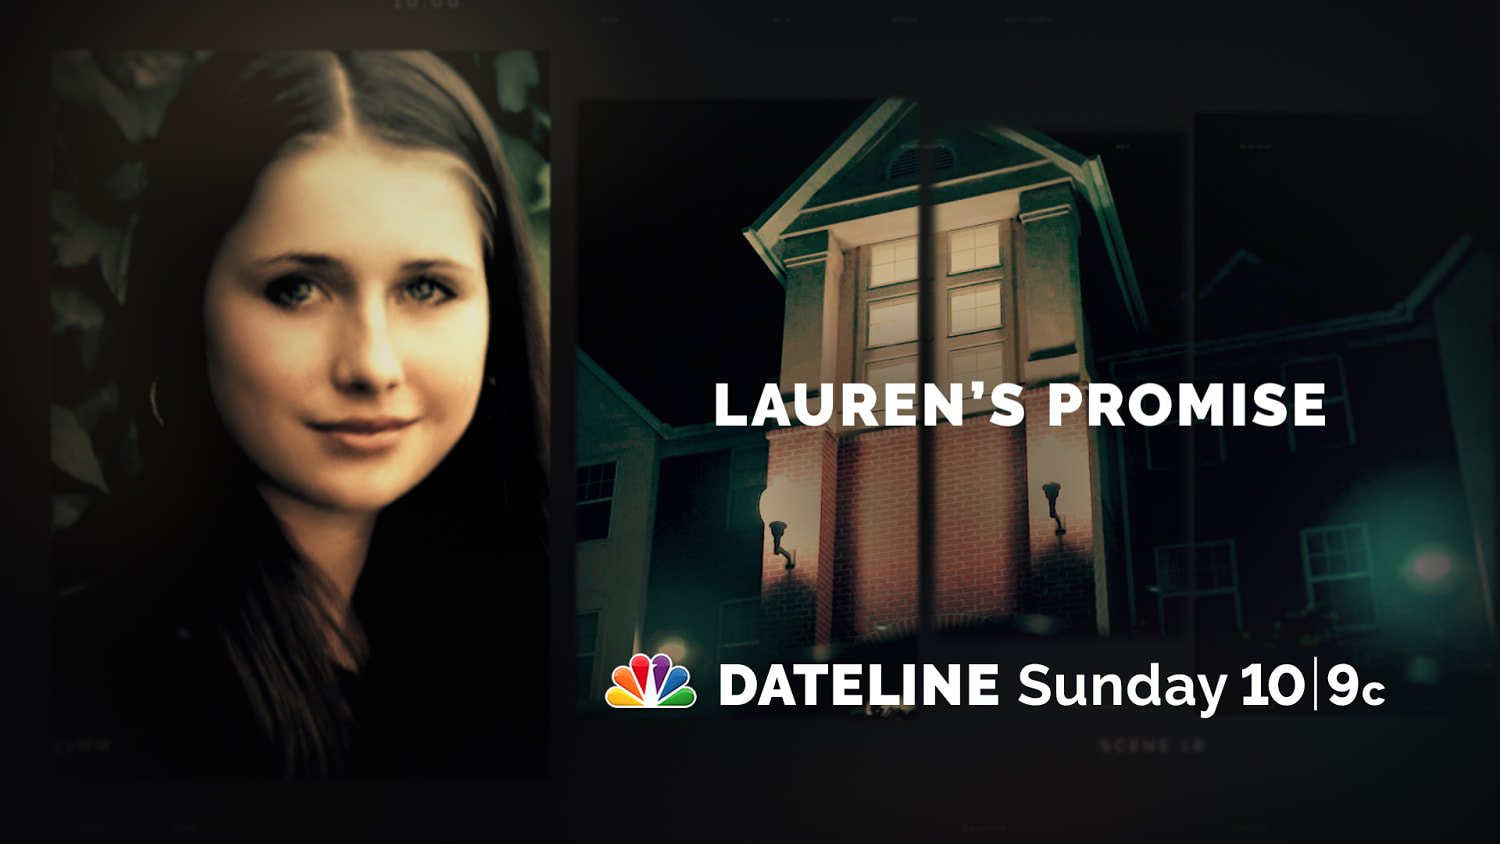 DATELINE SUNDAY SNEAK PEEK: Lauren's Promise